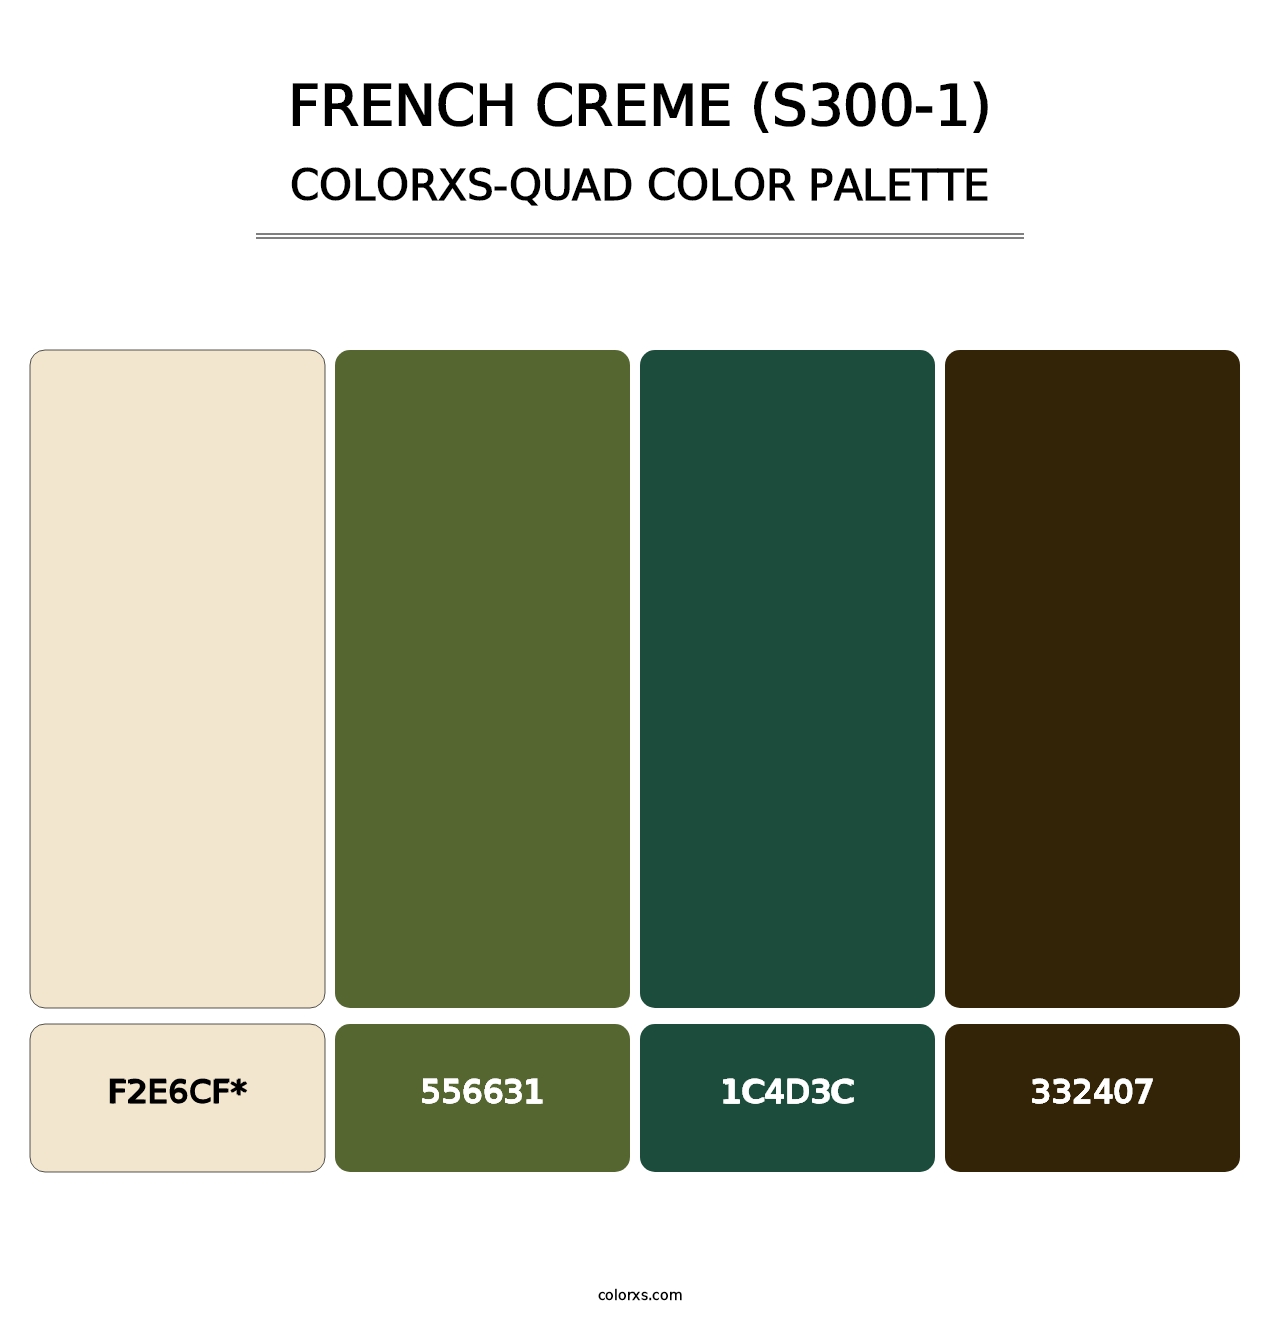 French Creme (S300-1) - Colorxs Quad Palette